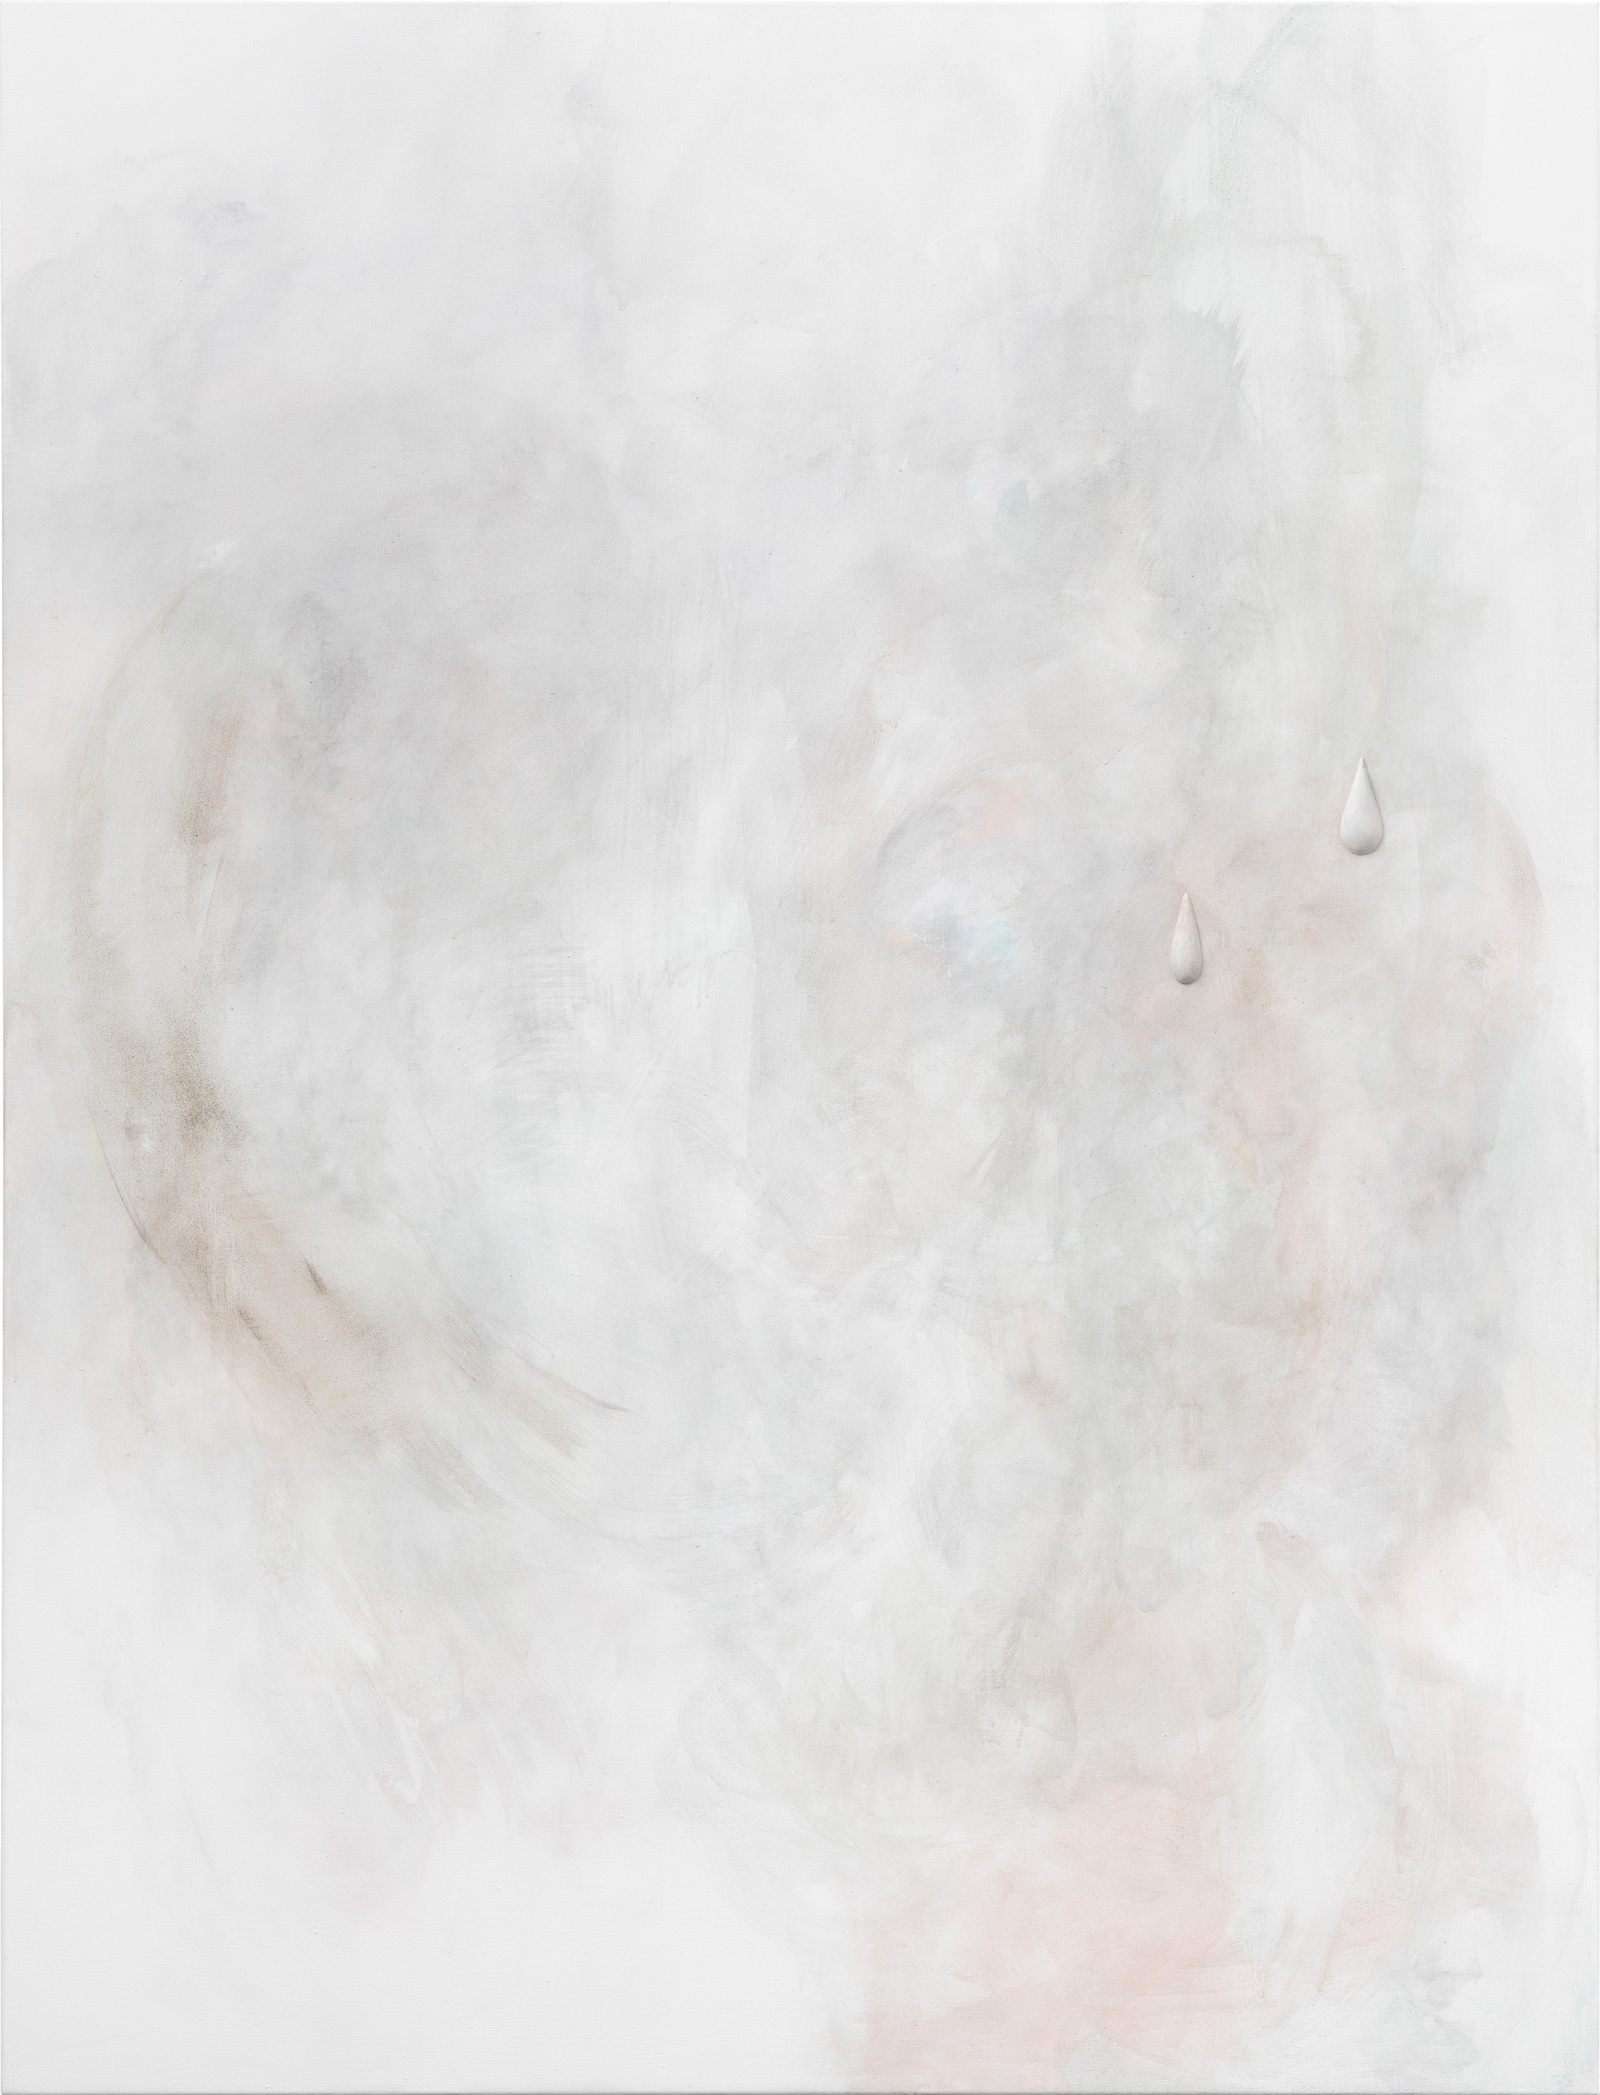 Untitled, 2018. metalpigment, mineral pigments, acrylic, rigid foam on canvas. 210 x 160 cm